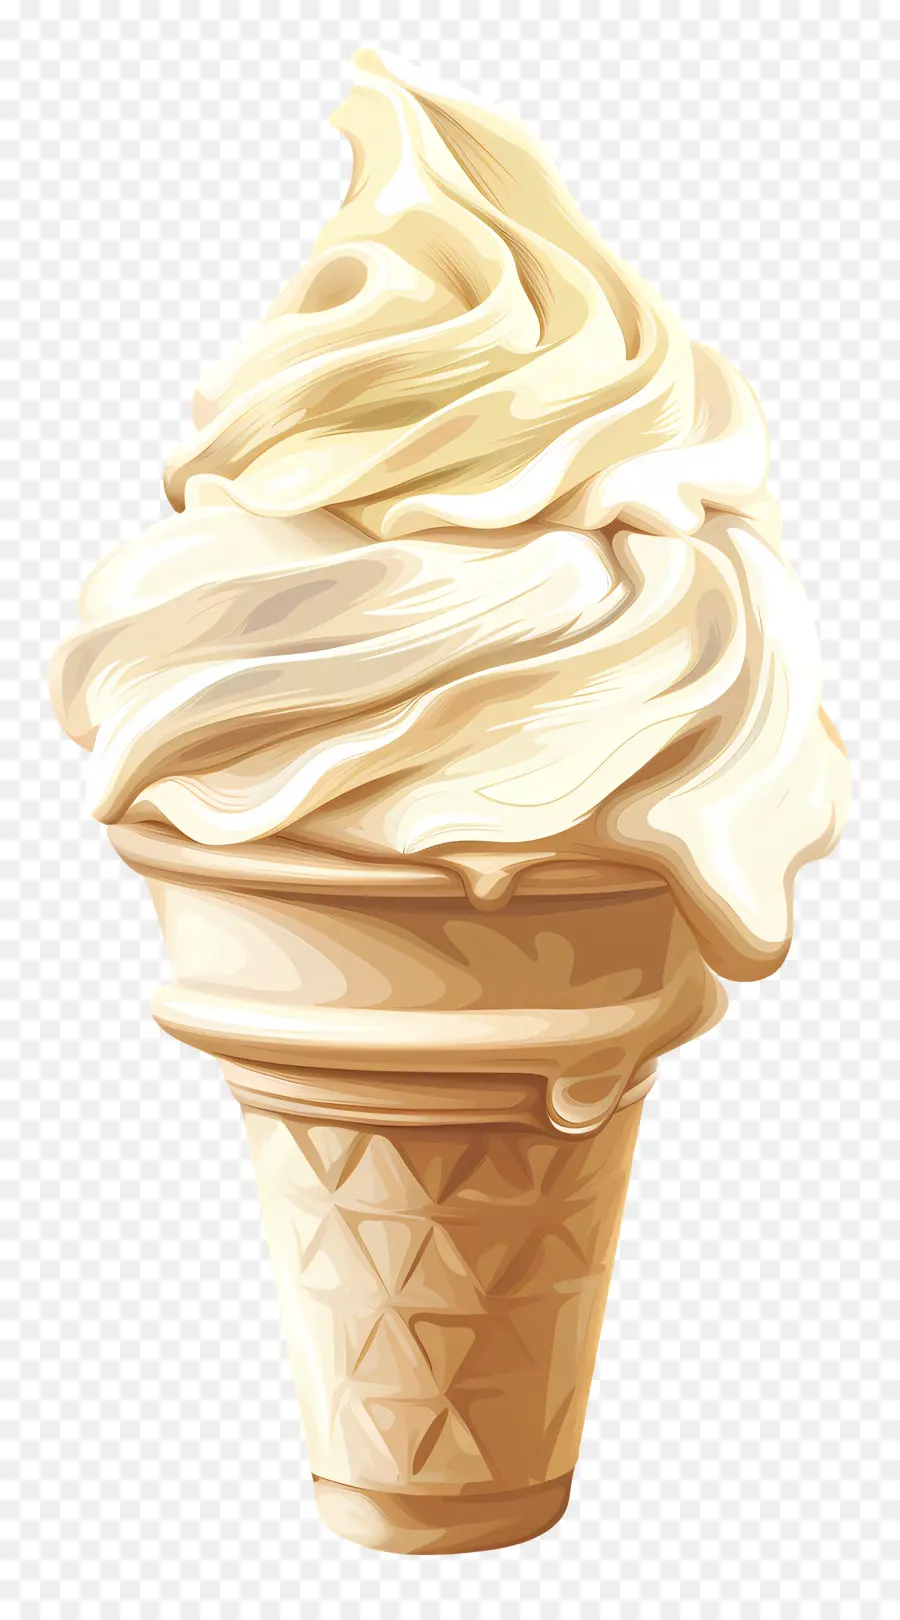 vanilla ice cream ice cream cone fluffy icing waffle cone swirled icing